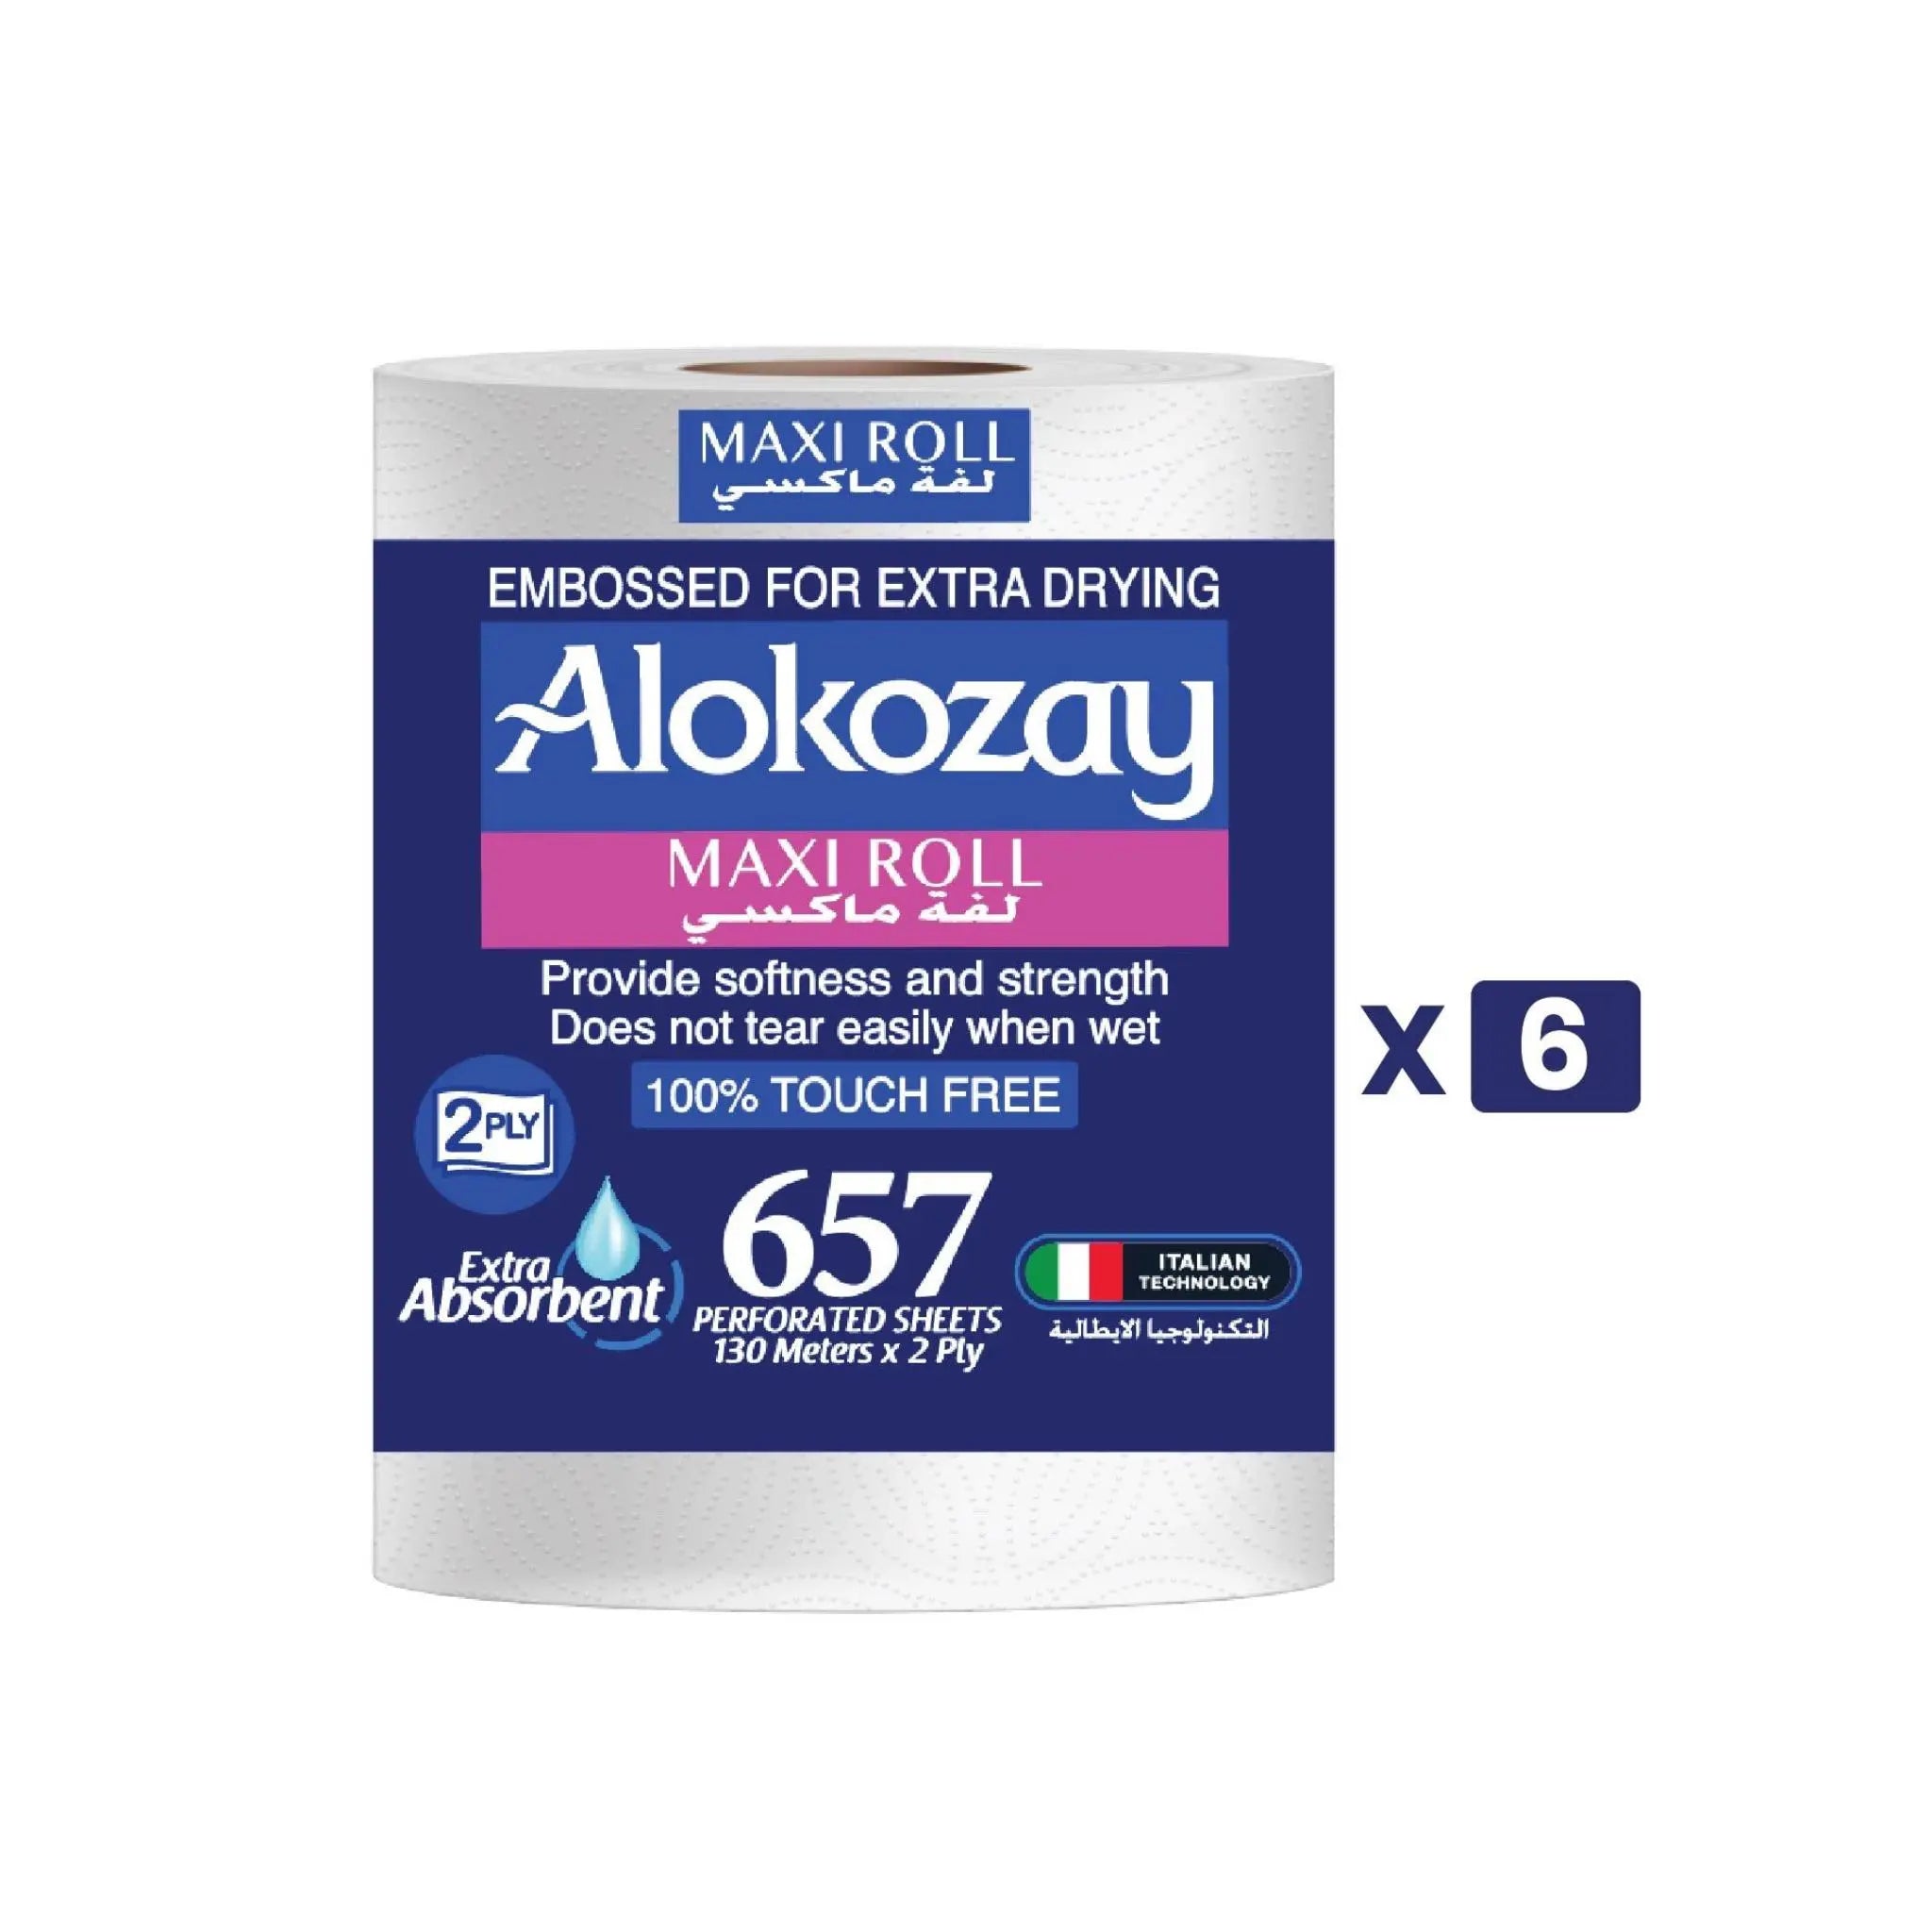 Alokozay Maxi Roll Embossed for Extra Drying - (2 ply x 657 Sheets) 6 packs per carton Marino.AE